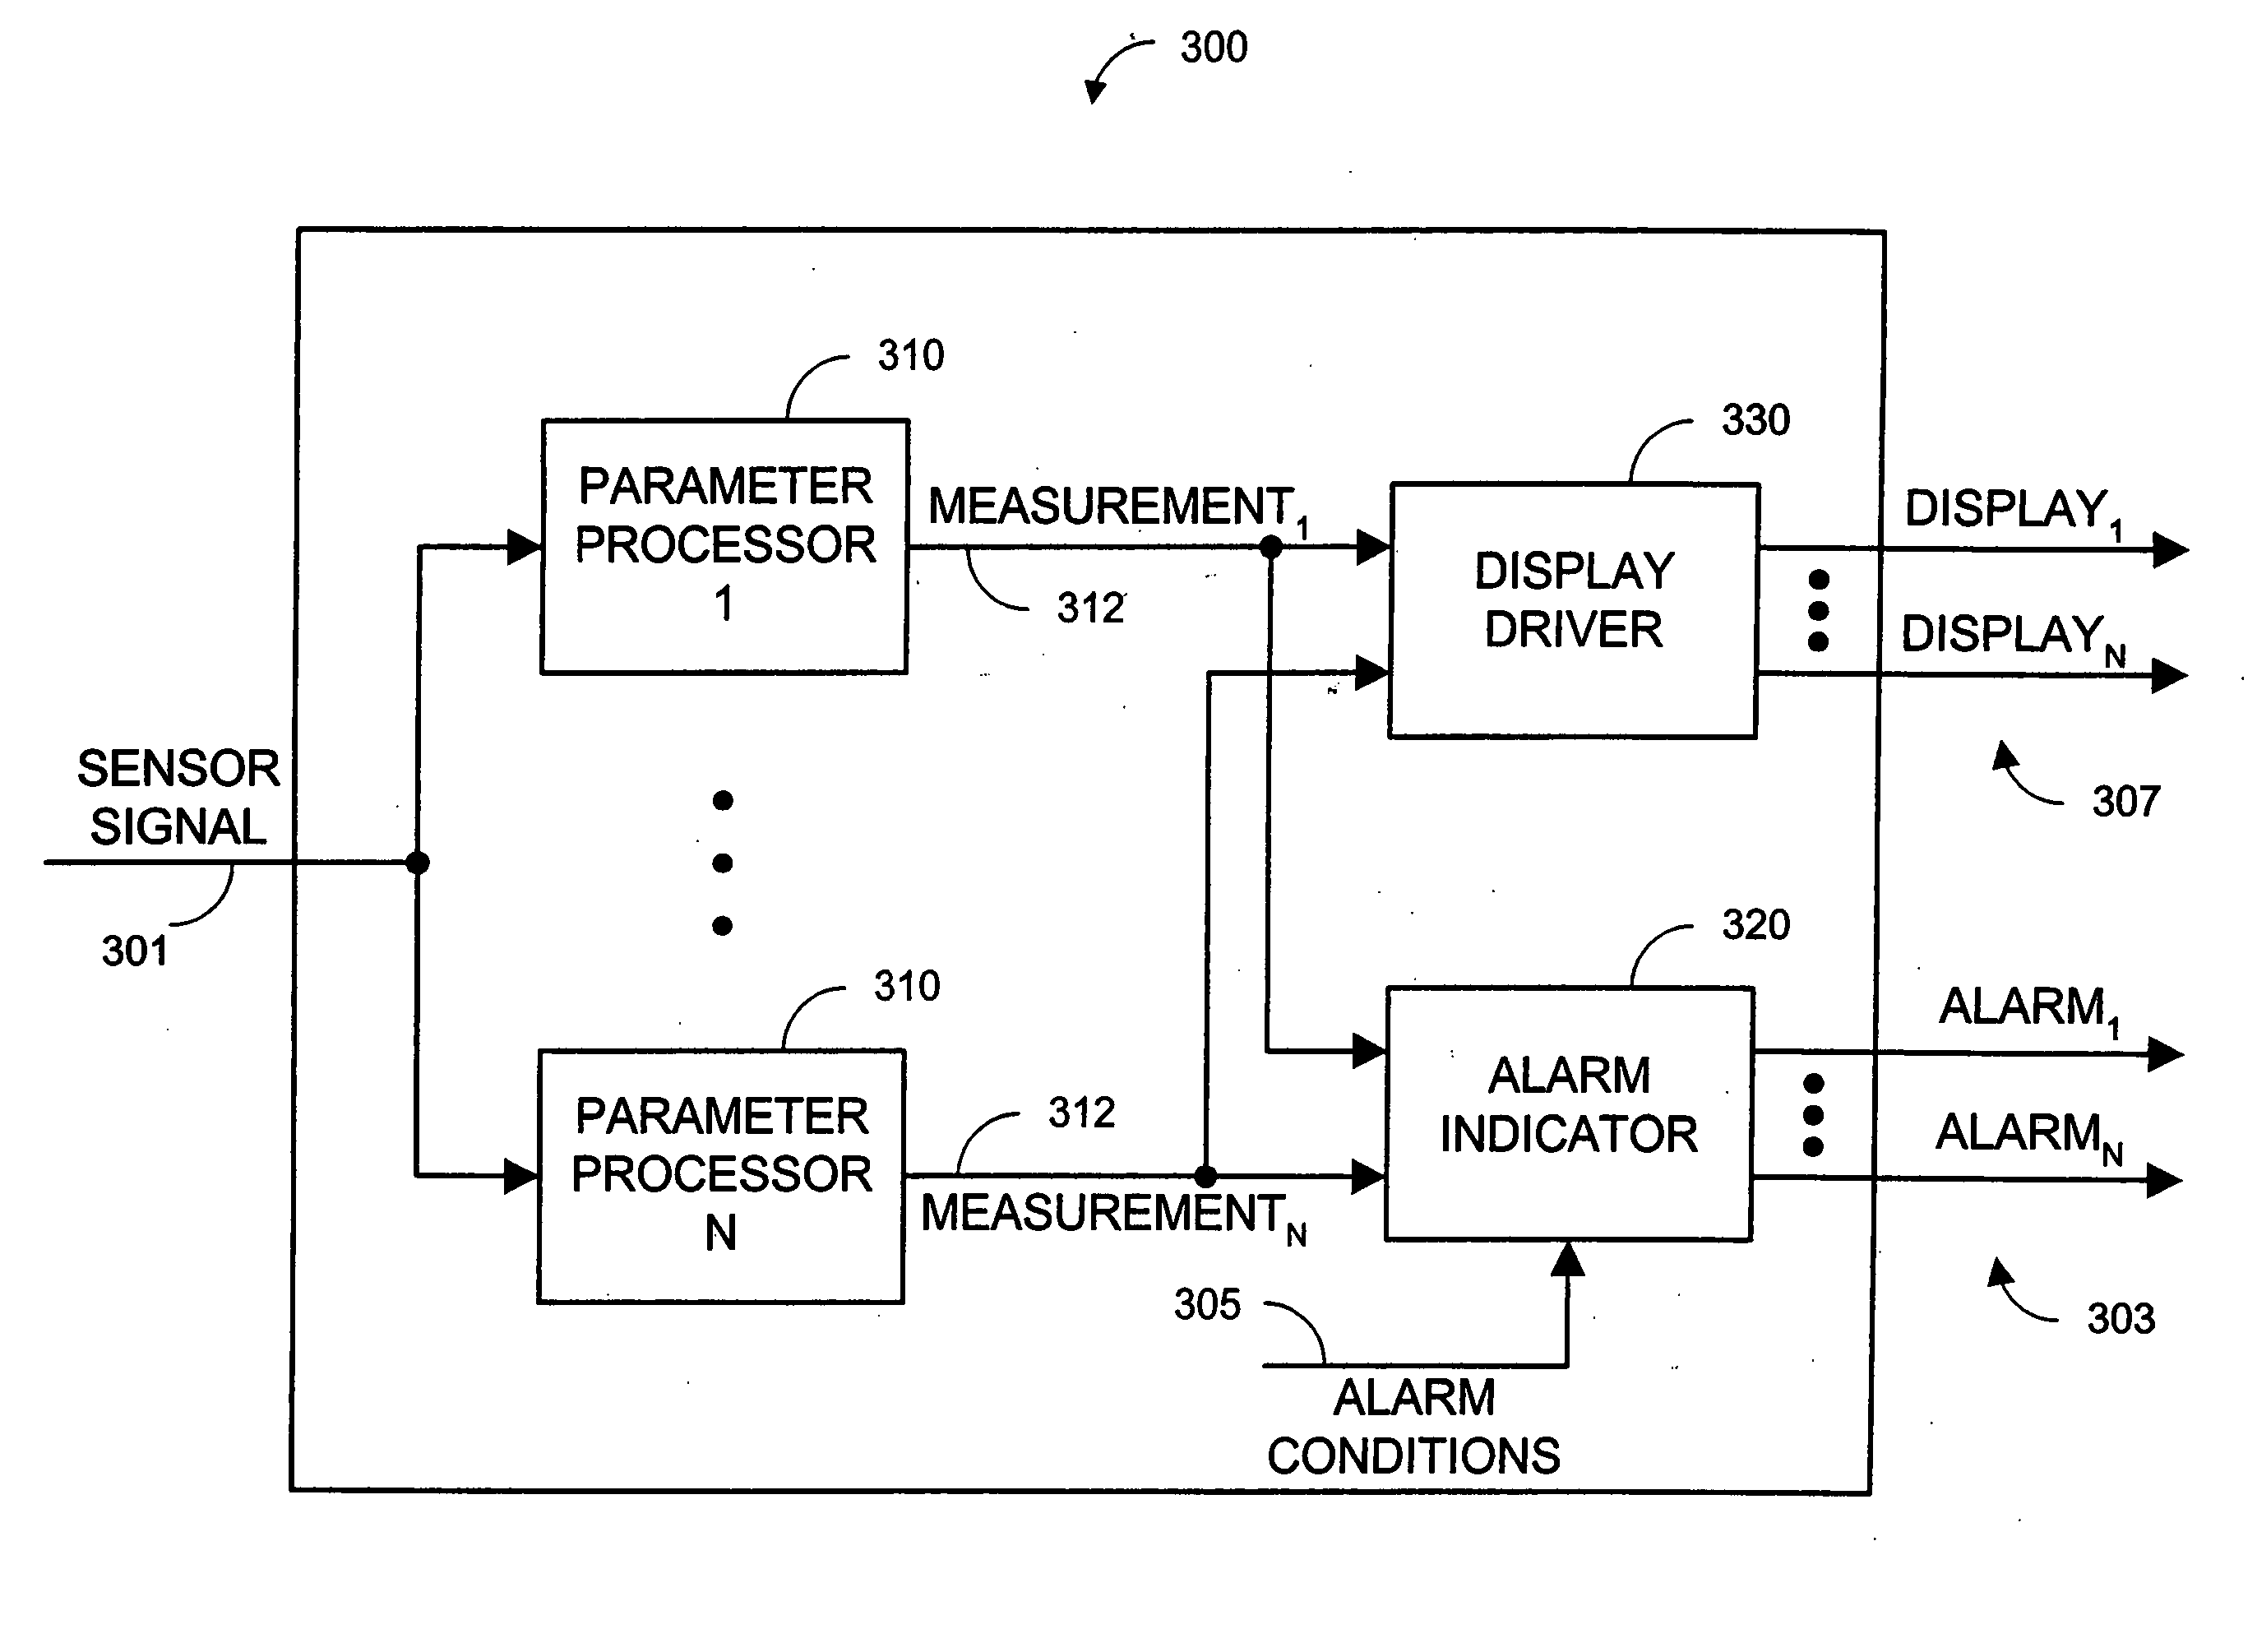 Parallel measurement alarm processor